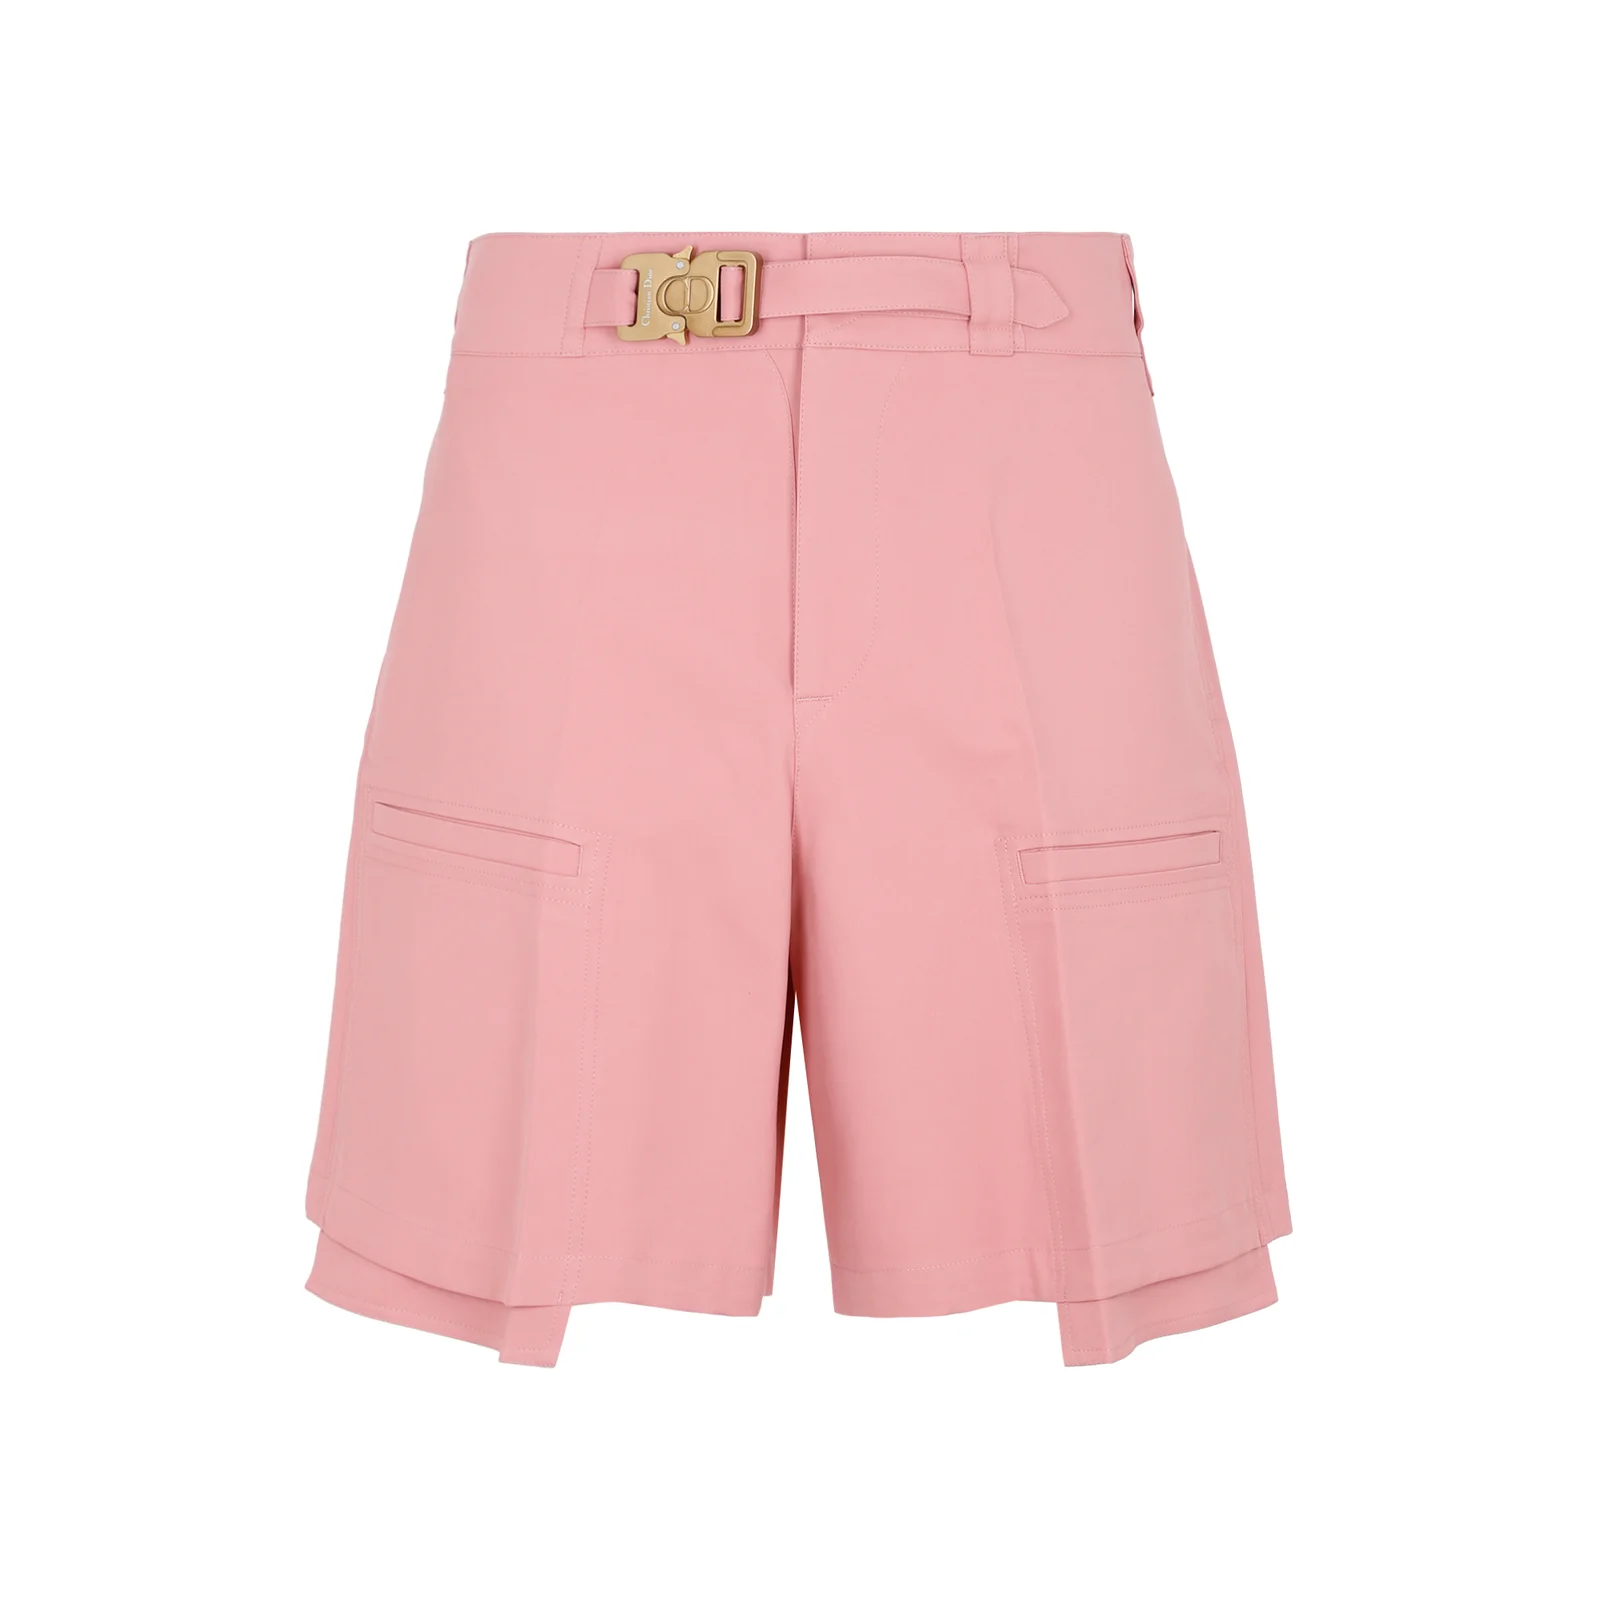 Dior 女士粉色工装短裤 283c150a-4451-400 In Pink